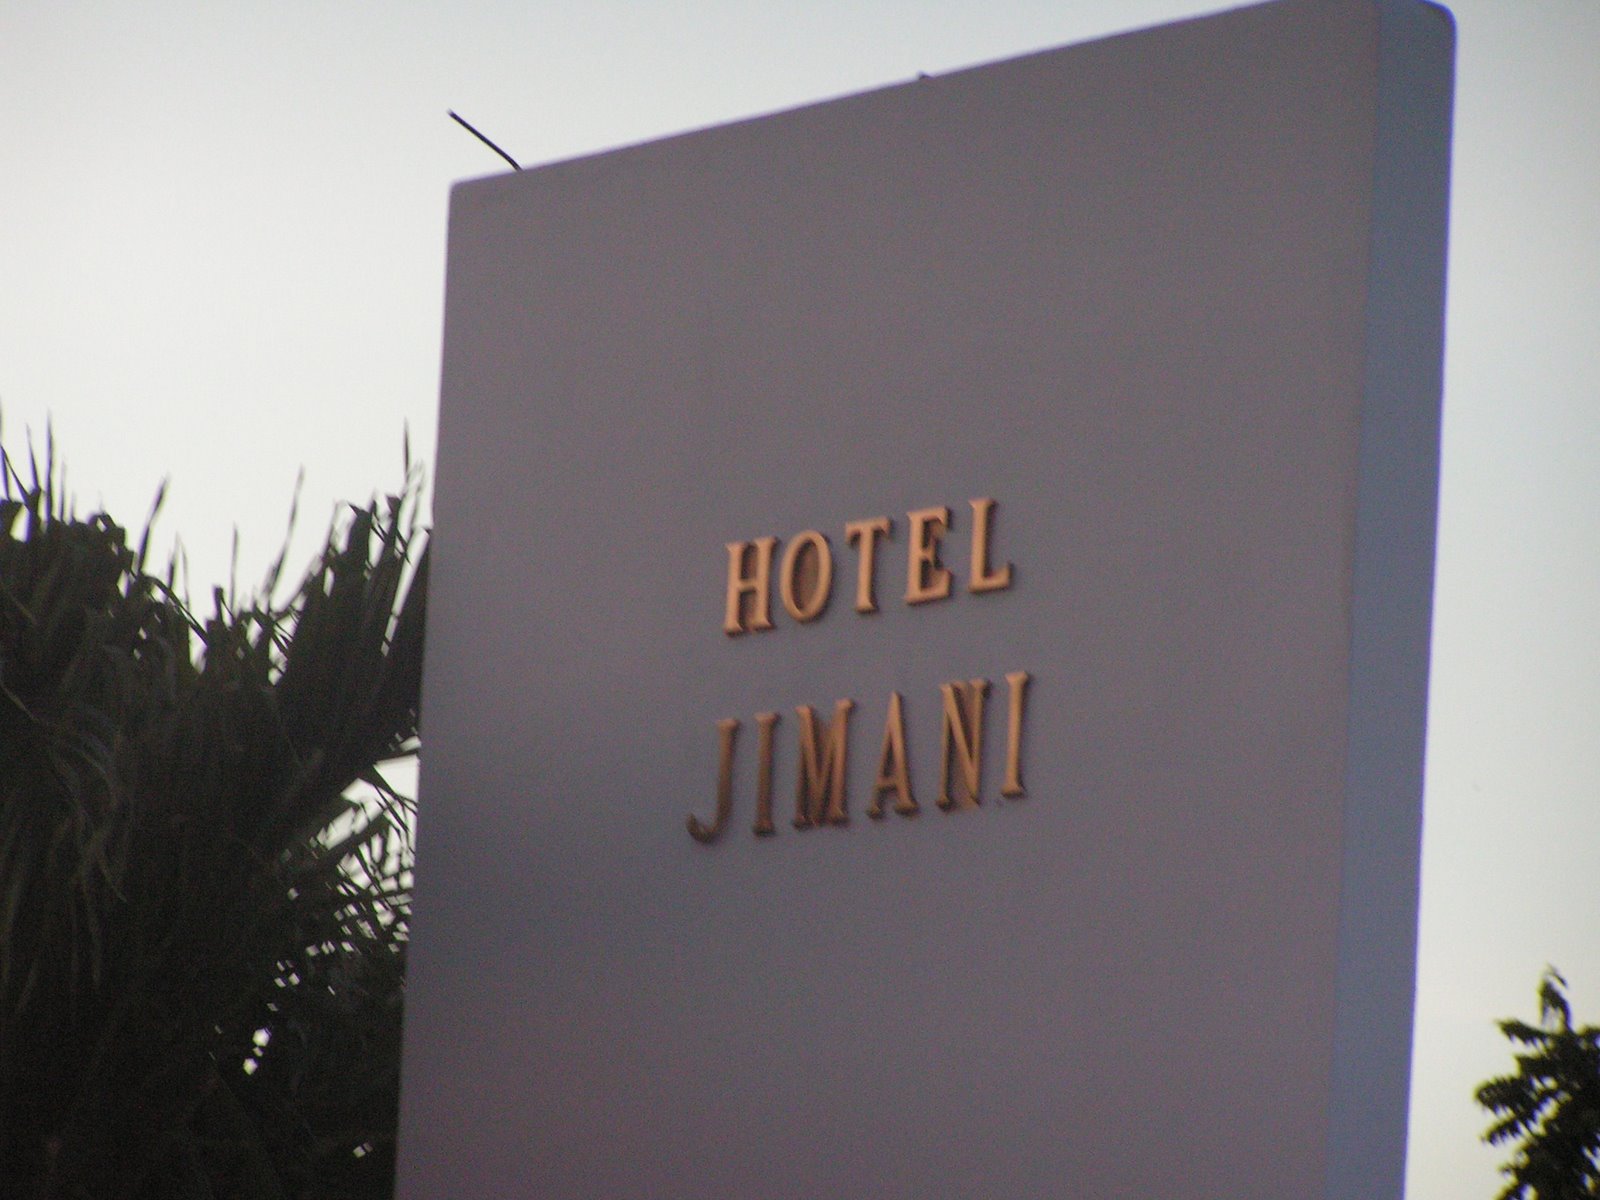 Hotel Jimaní invita